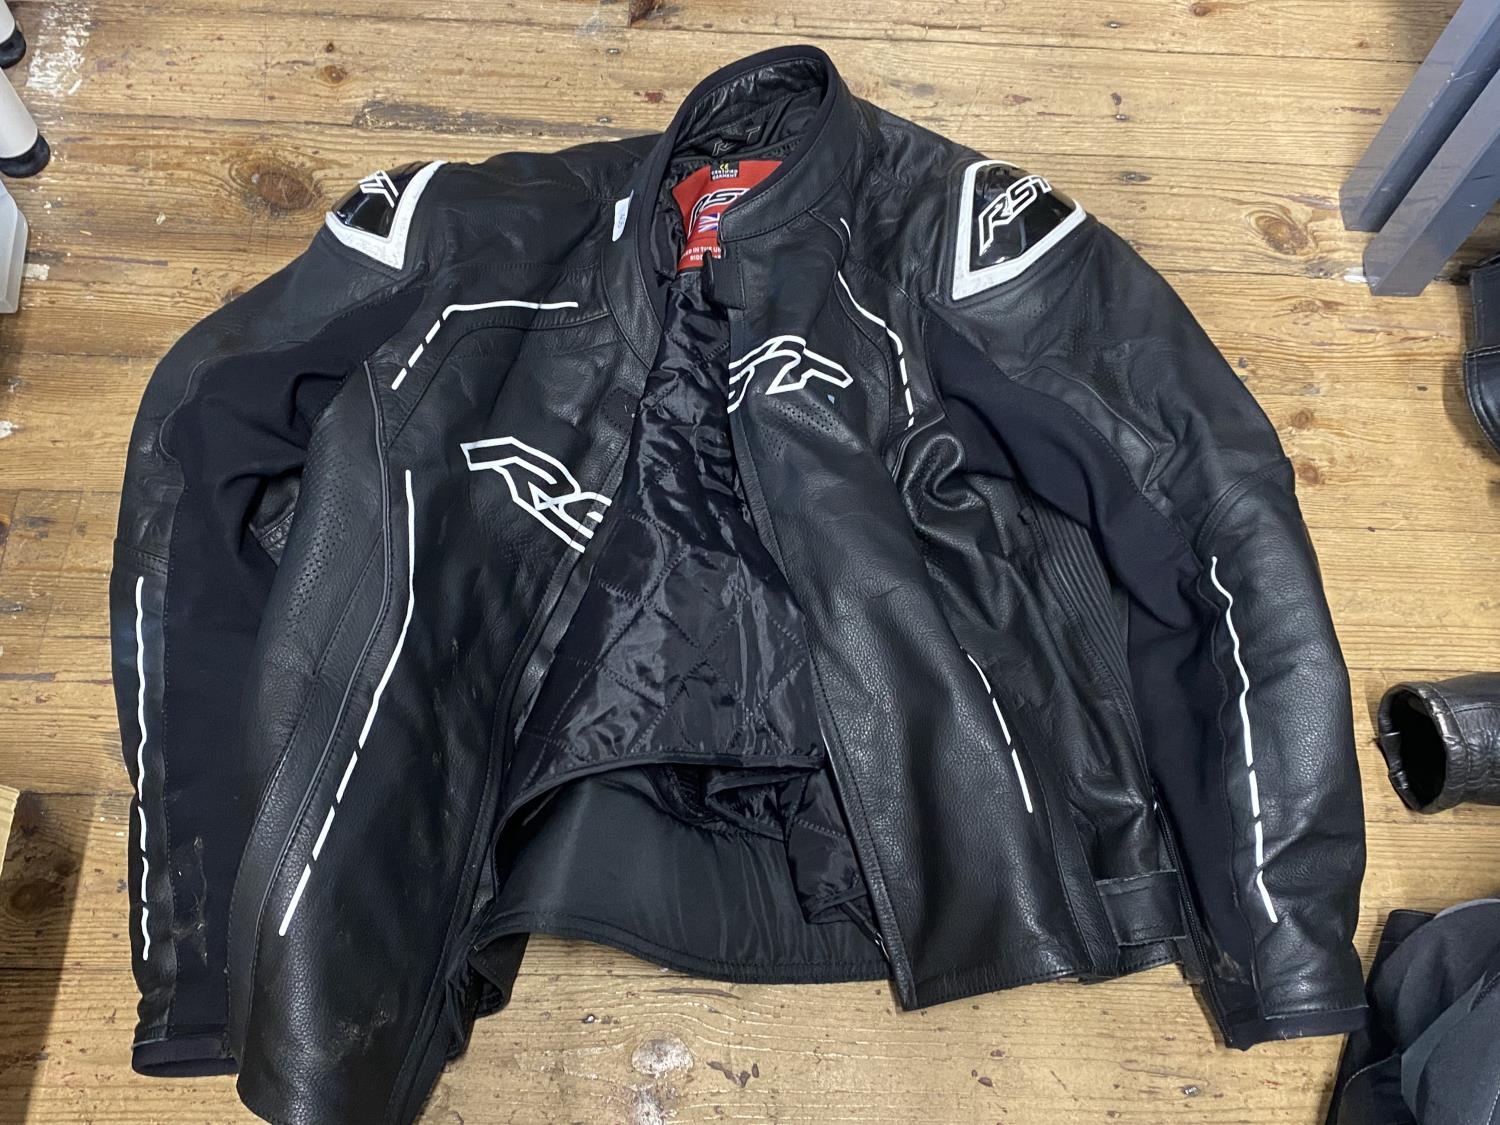 A RST motorbike jacket size 50